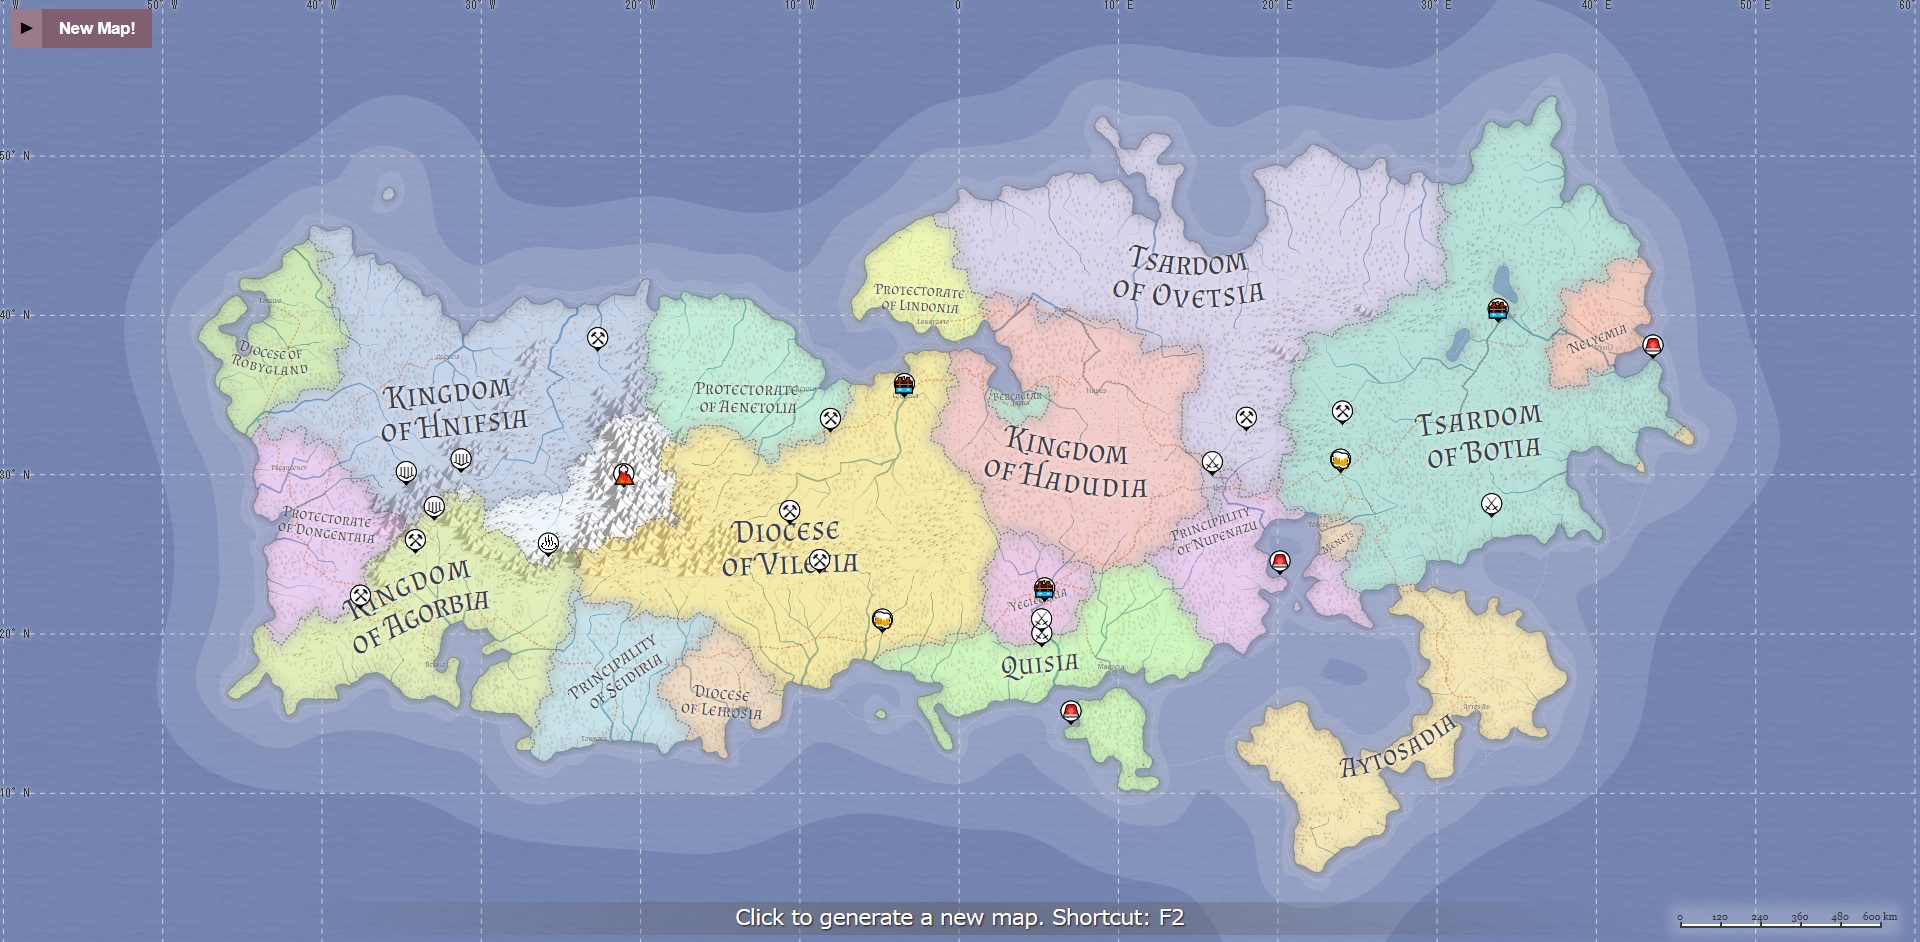 Azgaar Fantasy Map Generator. Azgaars Fantasy Map Generator. Azgaar's Fantasy Map Generator. Nortantis Fantasy Map Generator. Azgaar s fantasy map generator на русском